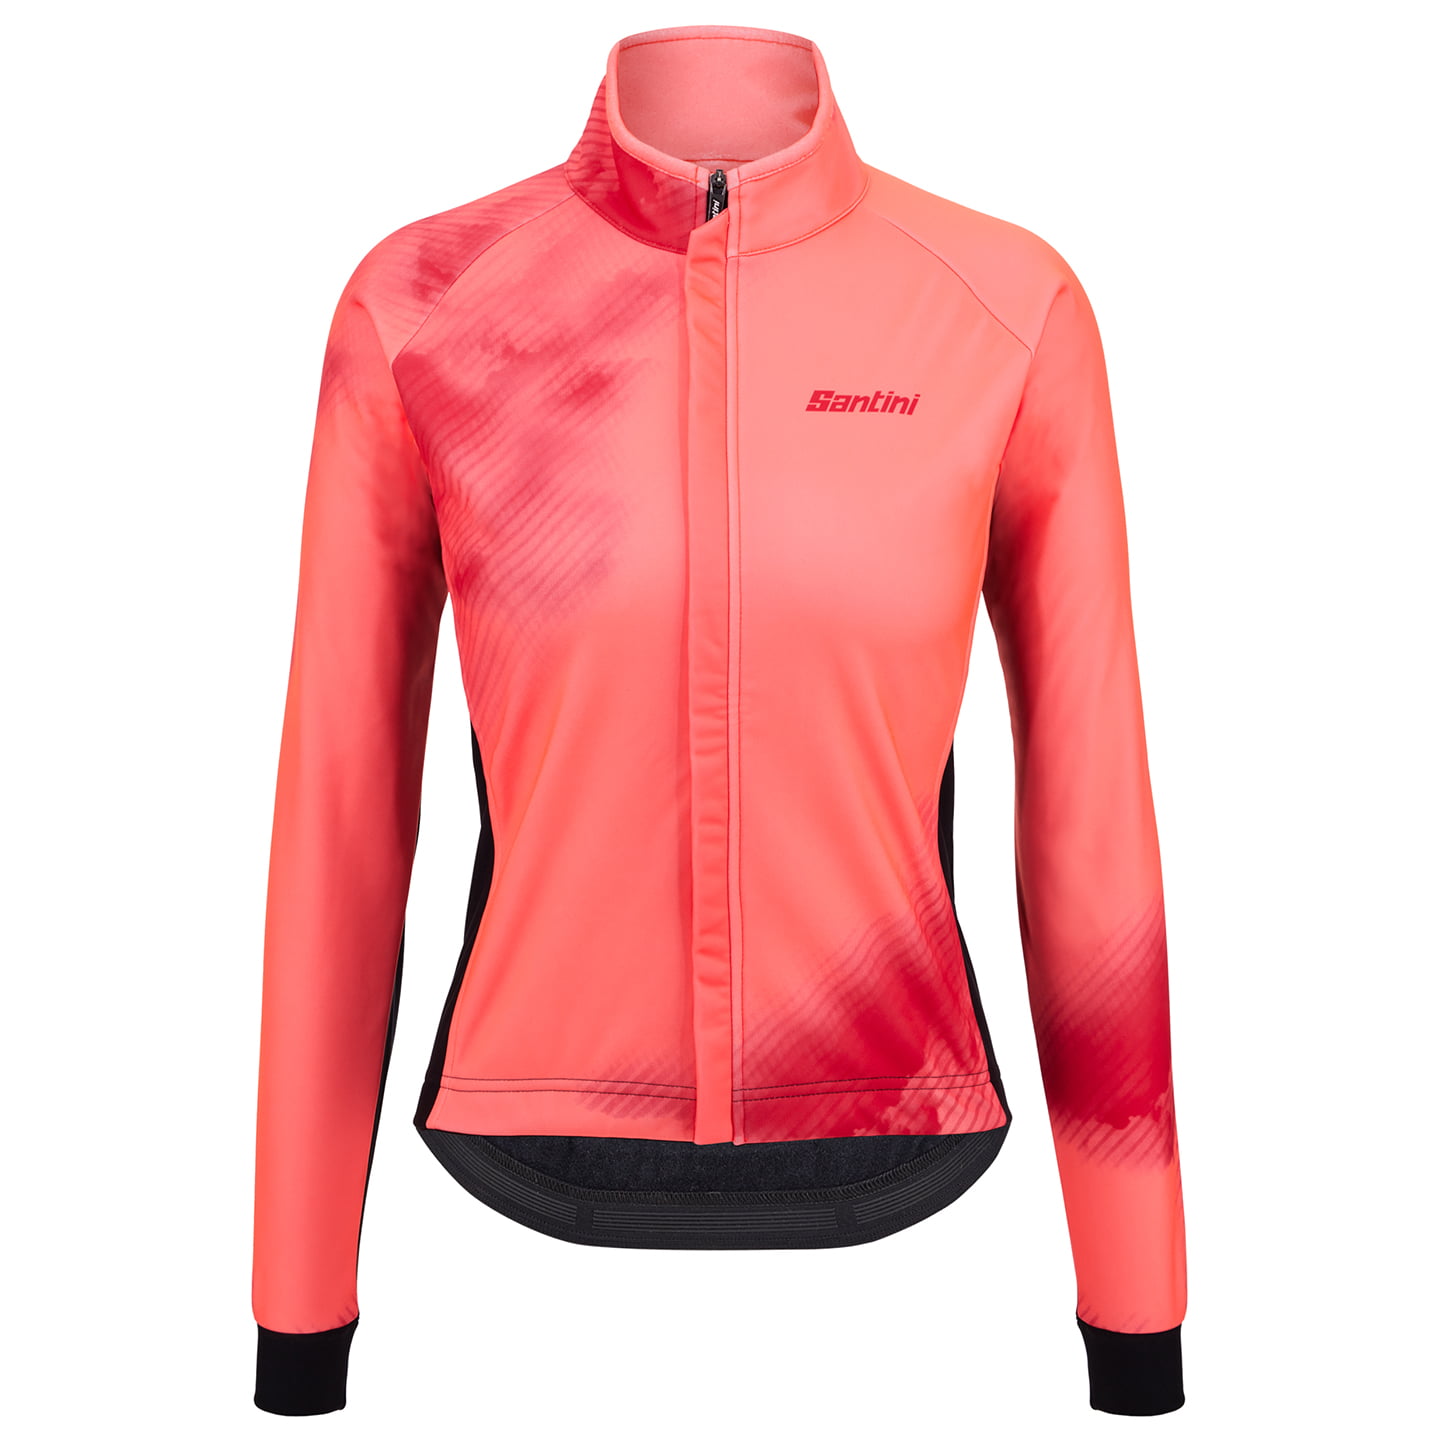 SANTINI Pure Dye winter jacket women Women’s Thermal Jacket, size S, Winter jacket, Cycle clothing